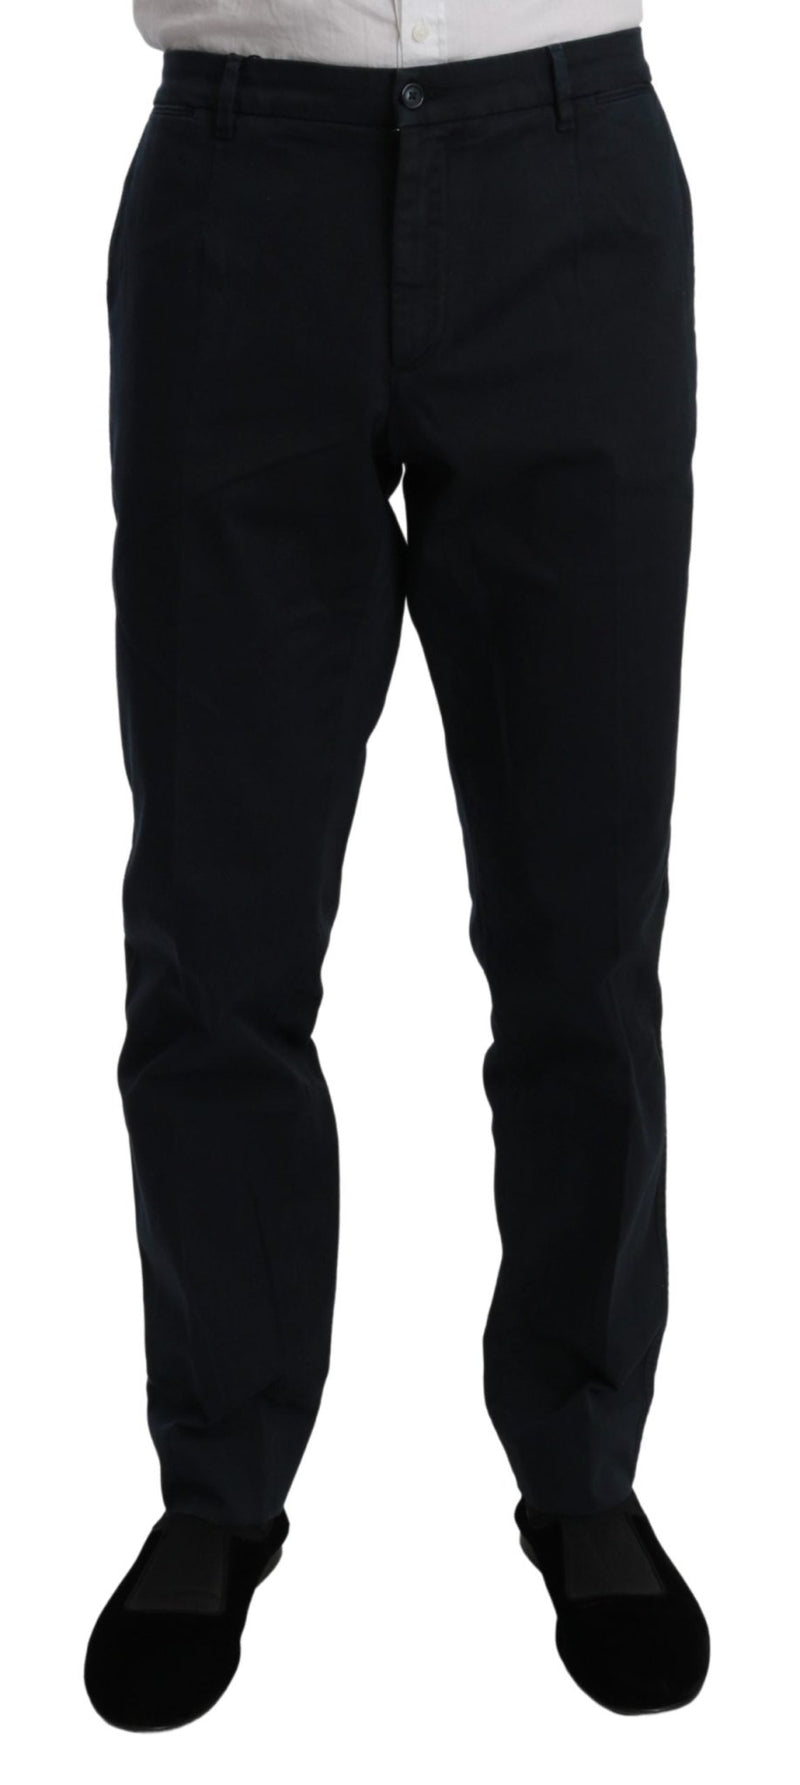 Blue Chinos Stretch Cotton Jeans Trouser - Avaz Shop